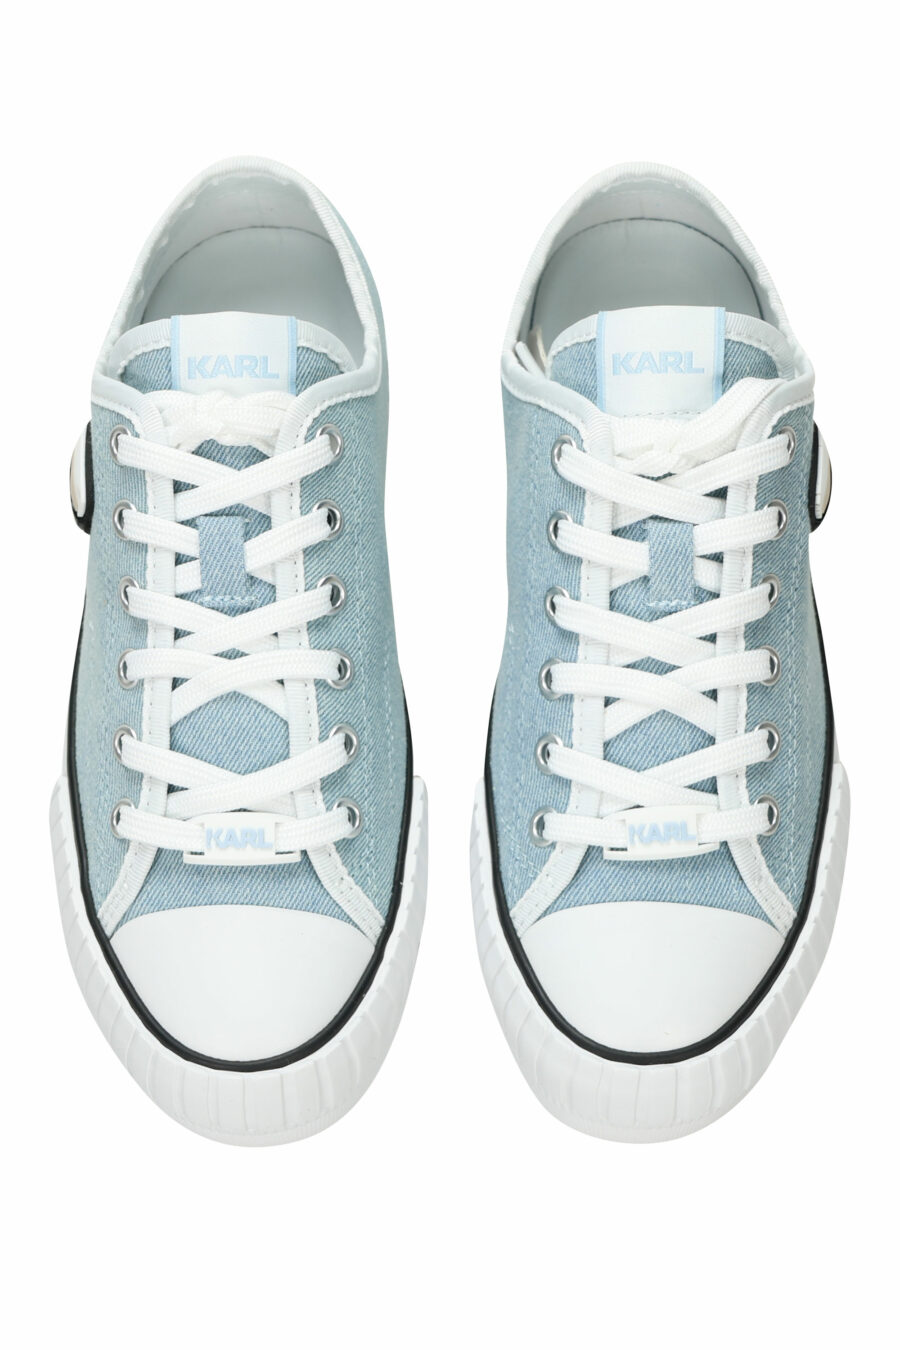 Baskets de style "converse" bleu clair avec mini-logo en caoutchouc "karl" - 5059529384691 4